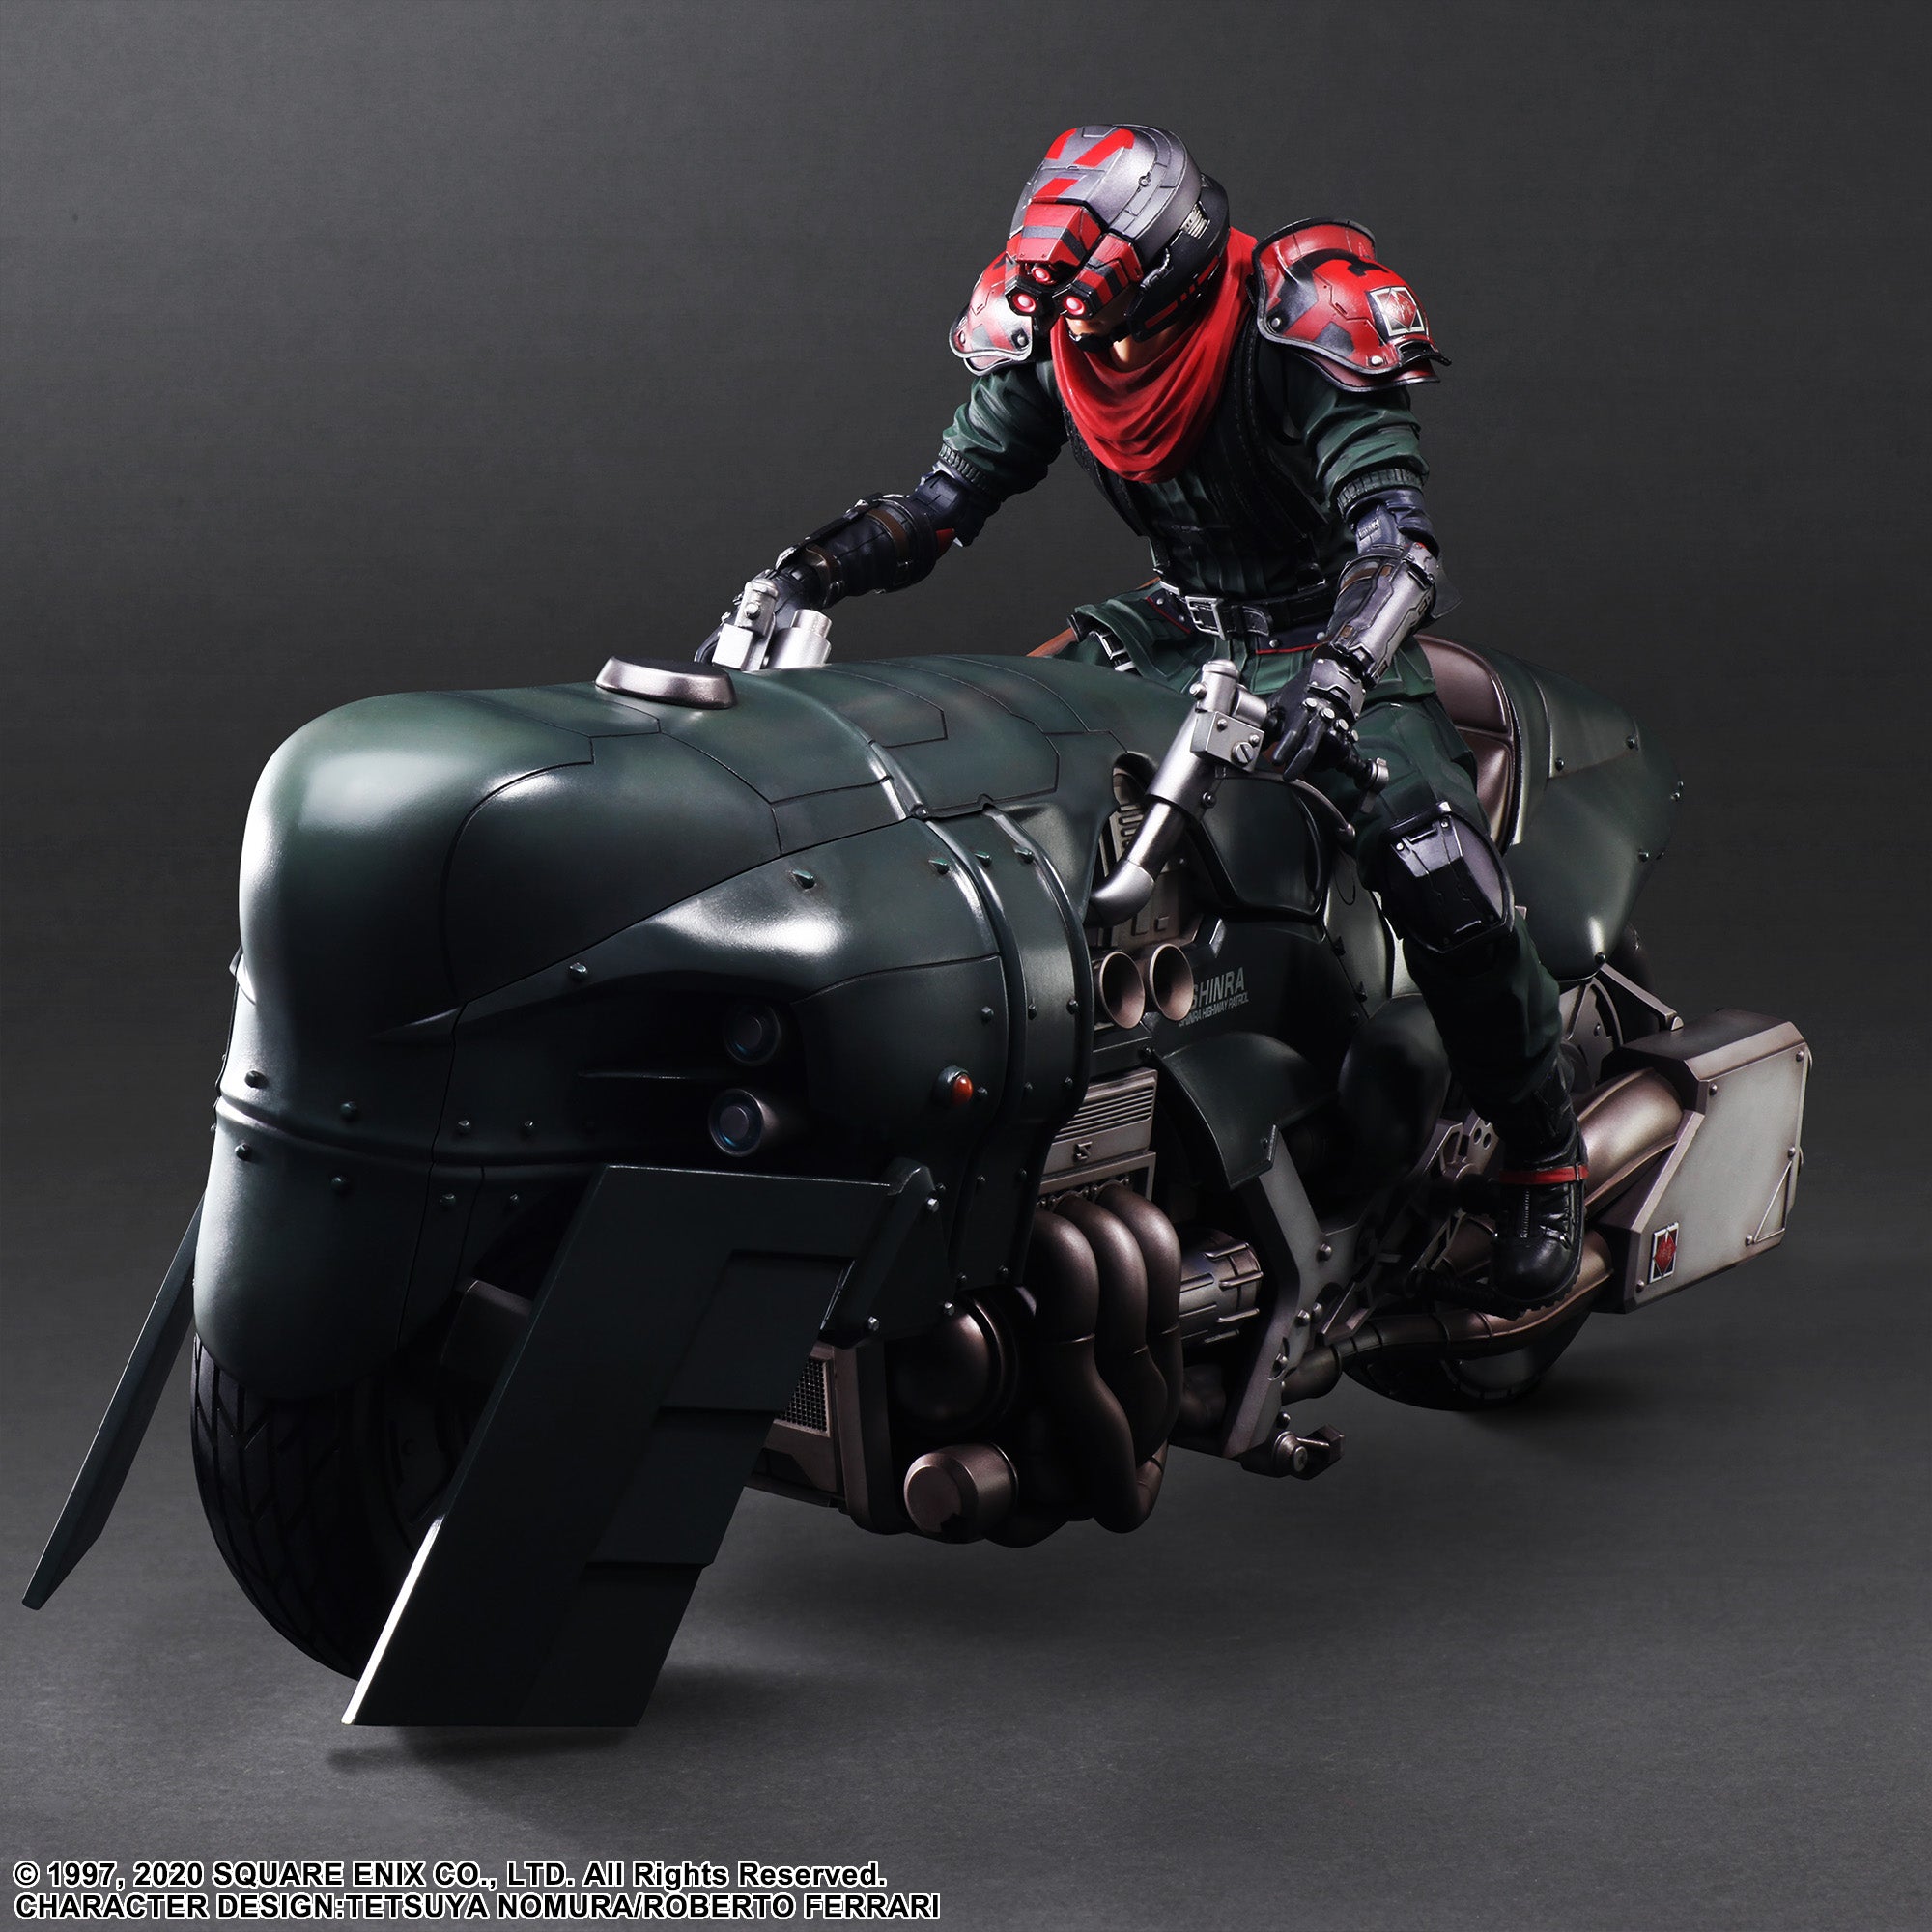 Square Enix Final Fantasy VII Remake Play Arts Kai Action Figure - Shinra Elite Security Officer & Motorcycle Set